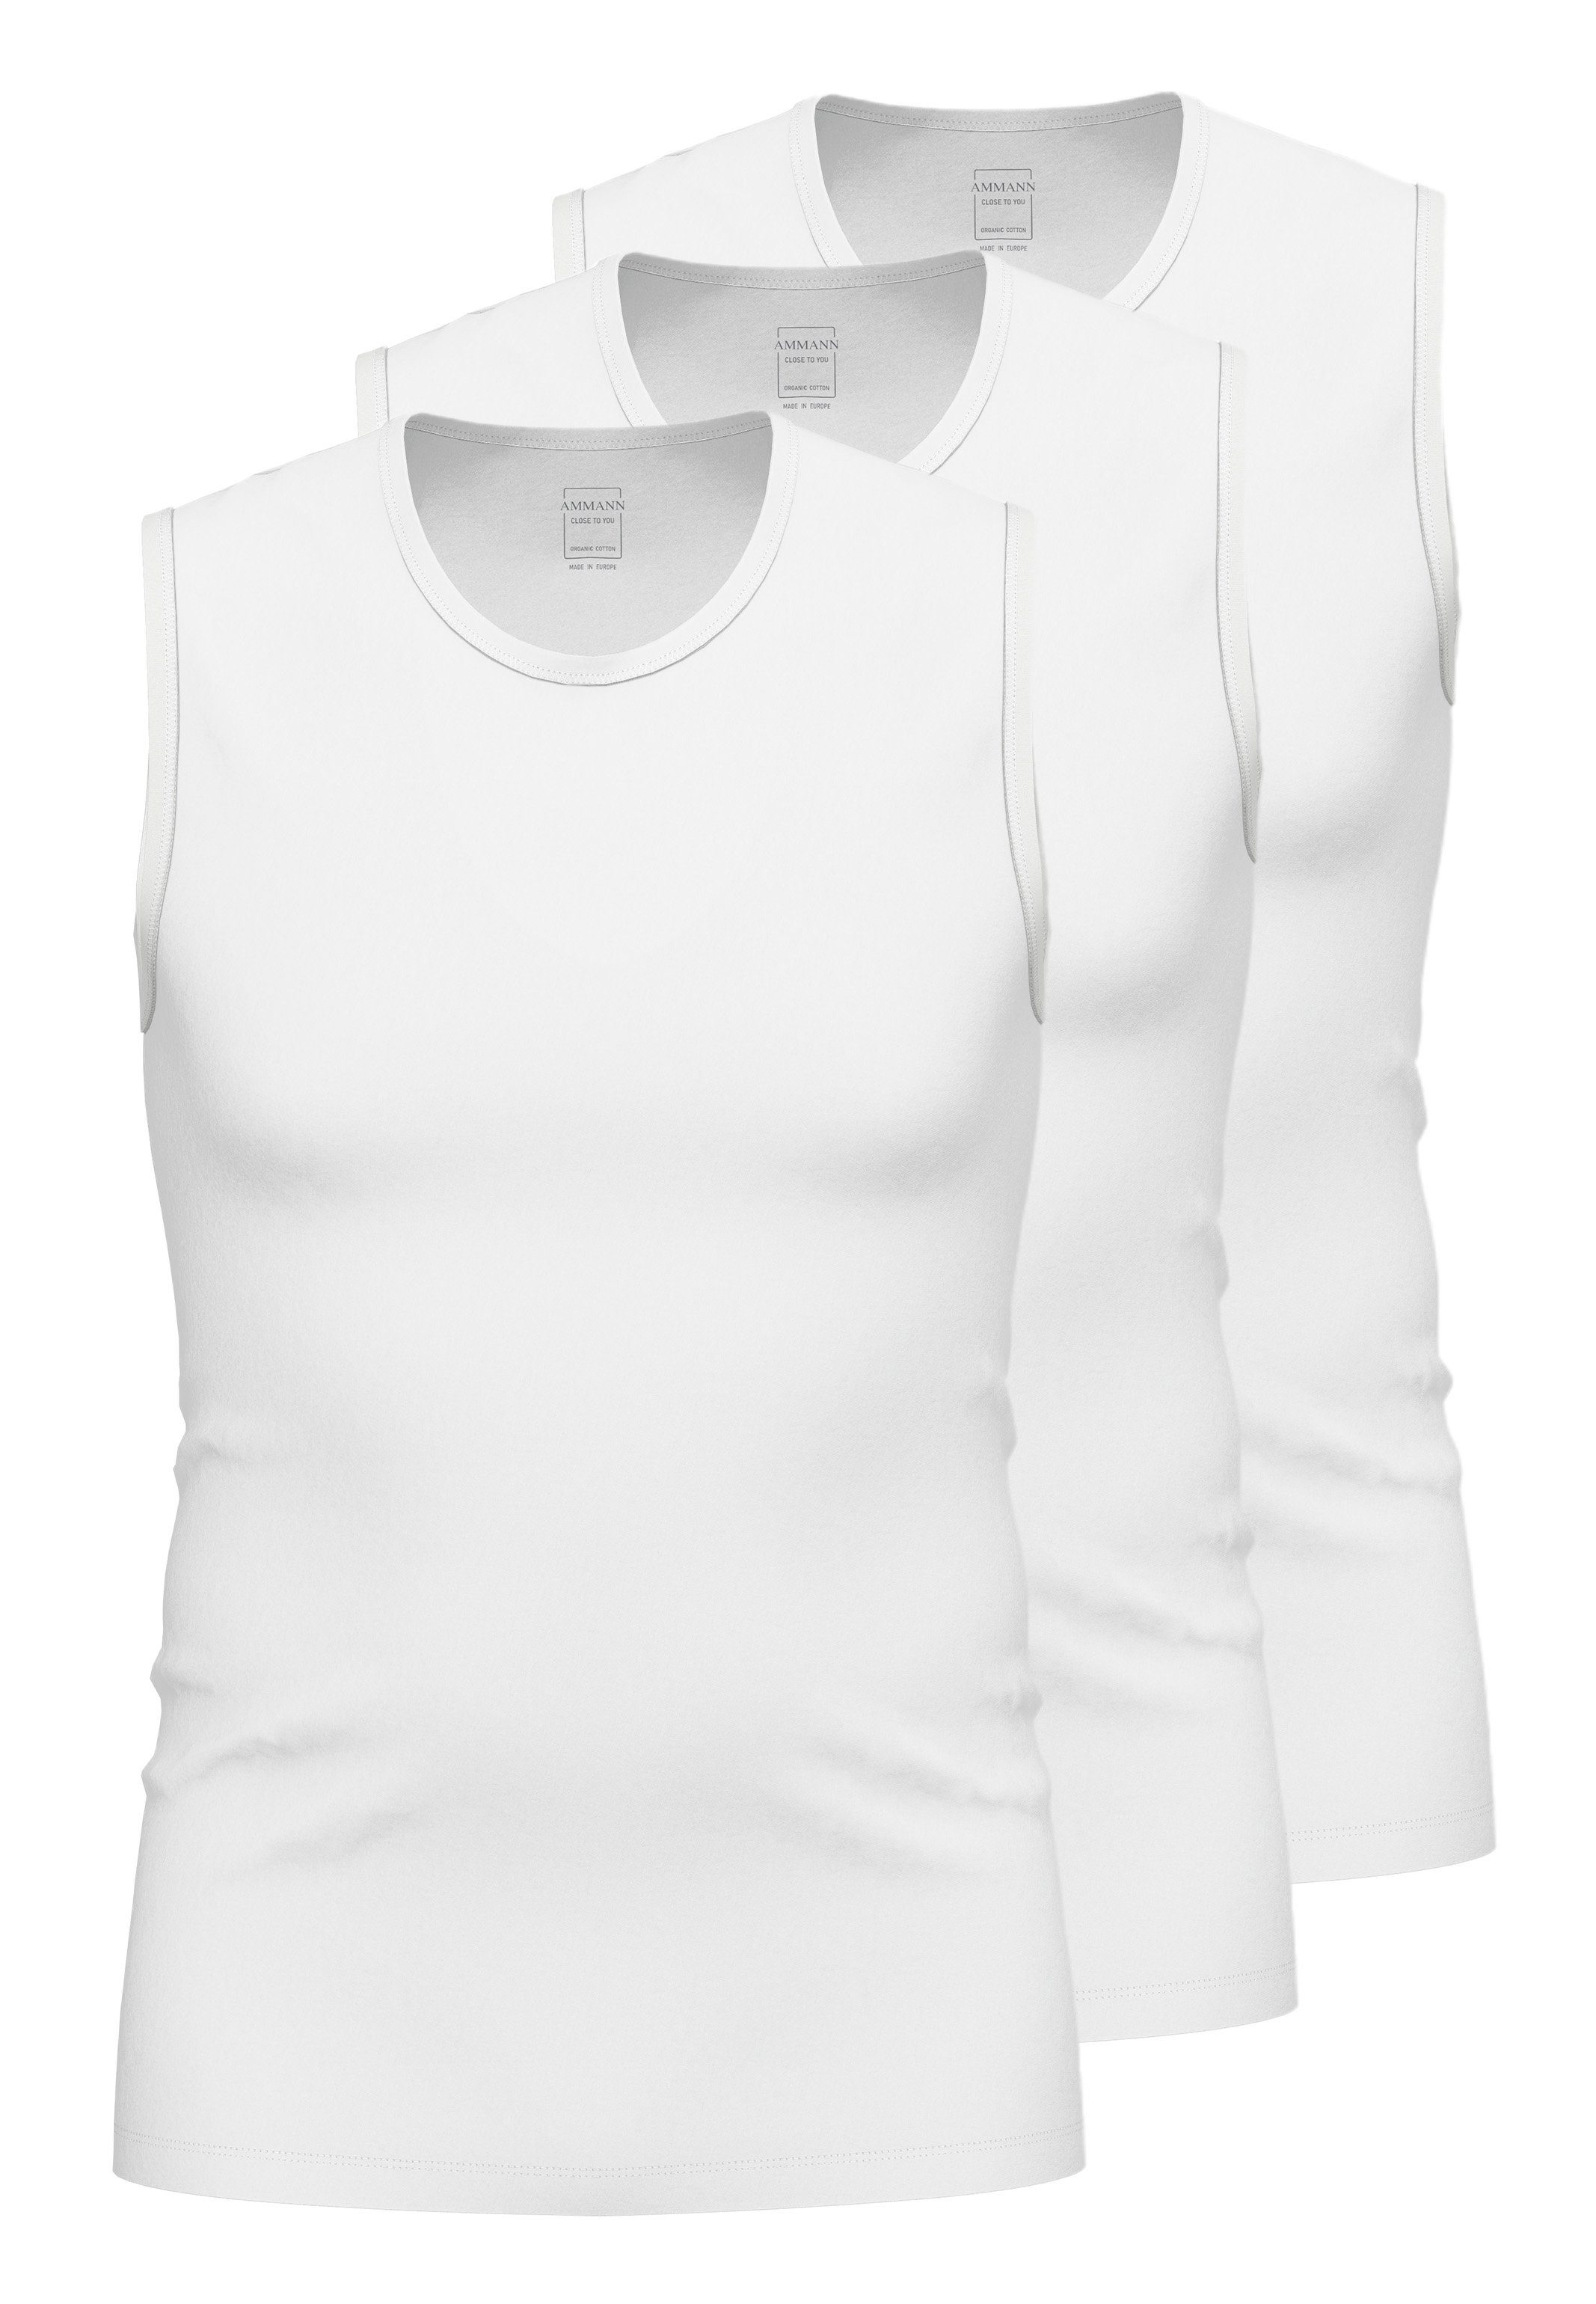 Ammann Unterhemd 3er Atmungsaktiv (Spar-Set, to Pack Tanktop you Close - - / Material 3-St) - Elastisches Unterhemd Baumwolle Weiß